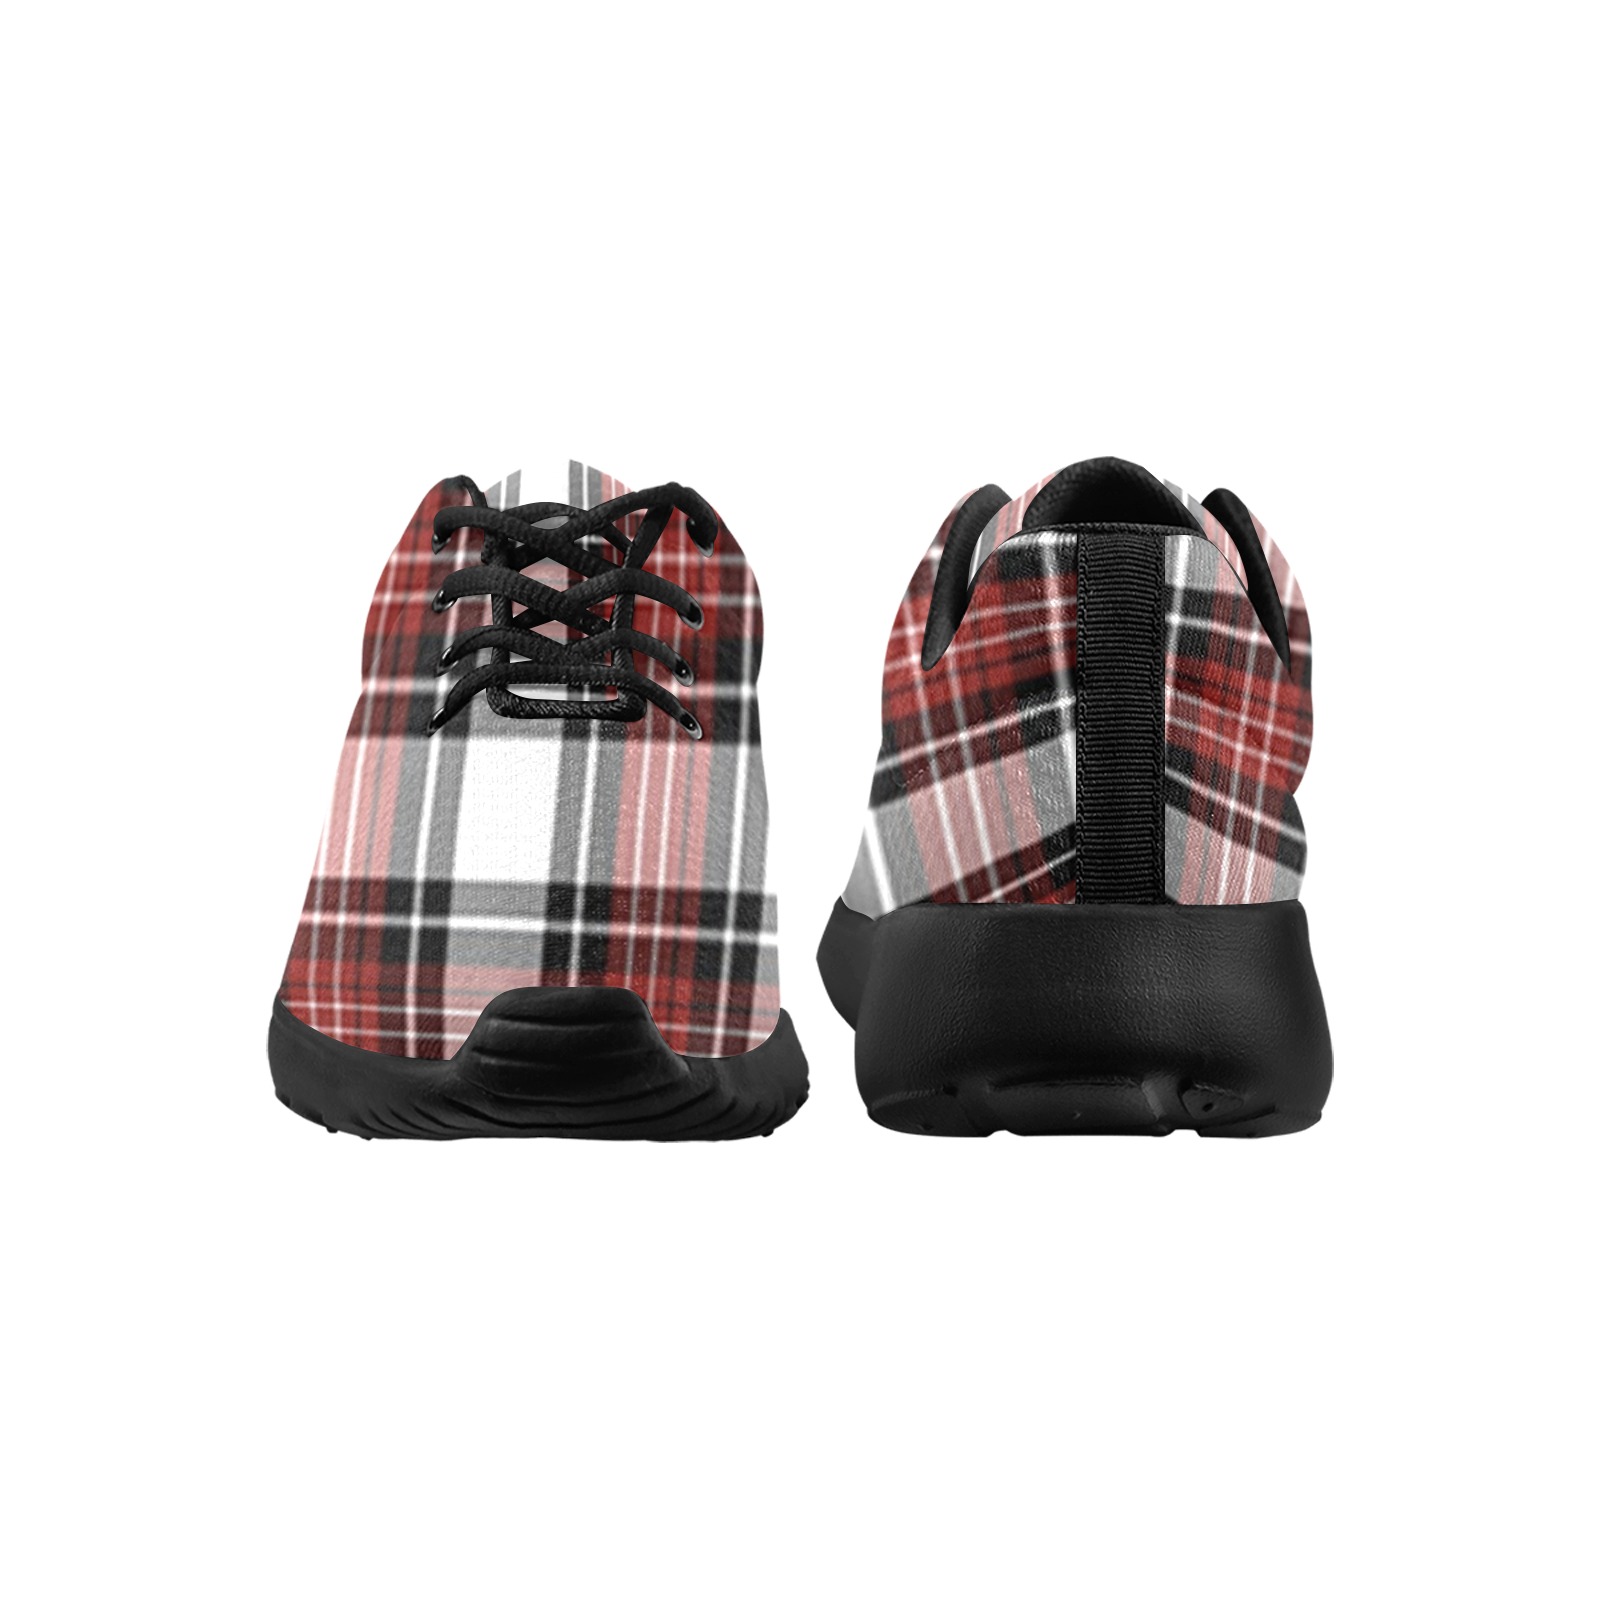 Red Black Plaid Women's Athletic Shoes (Model 0200)